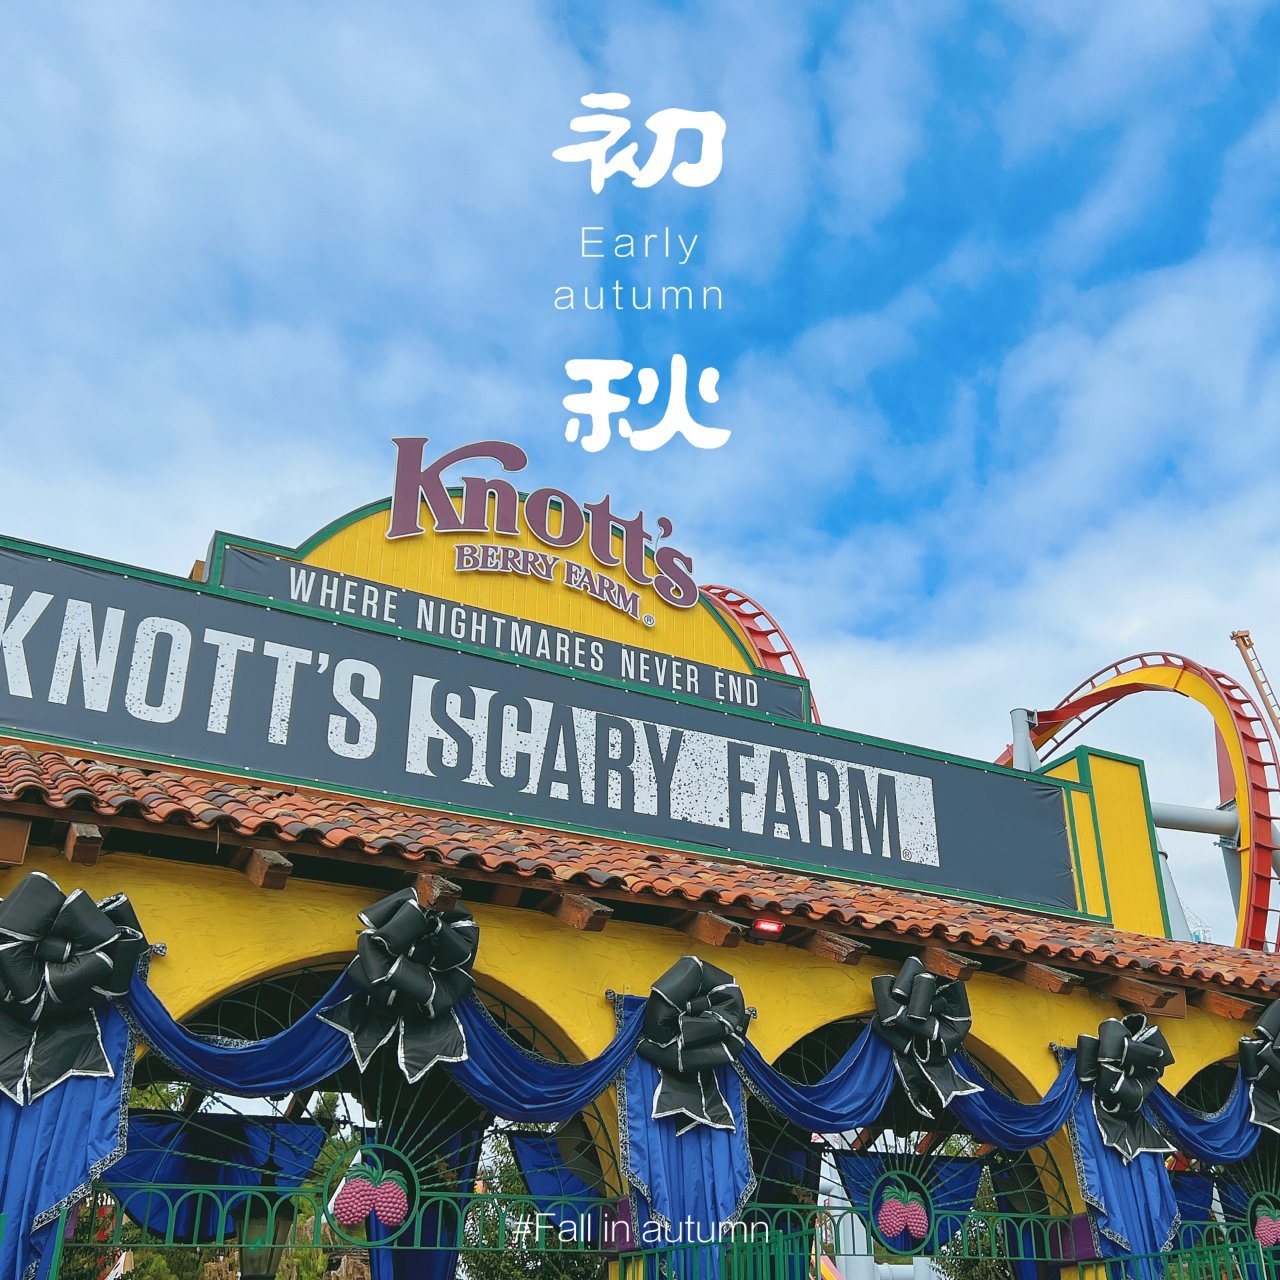 Knott’s berry farm